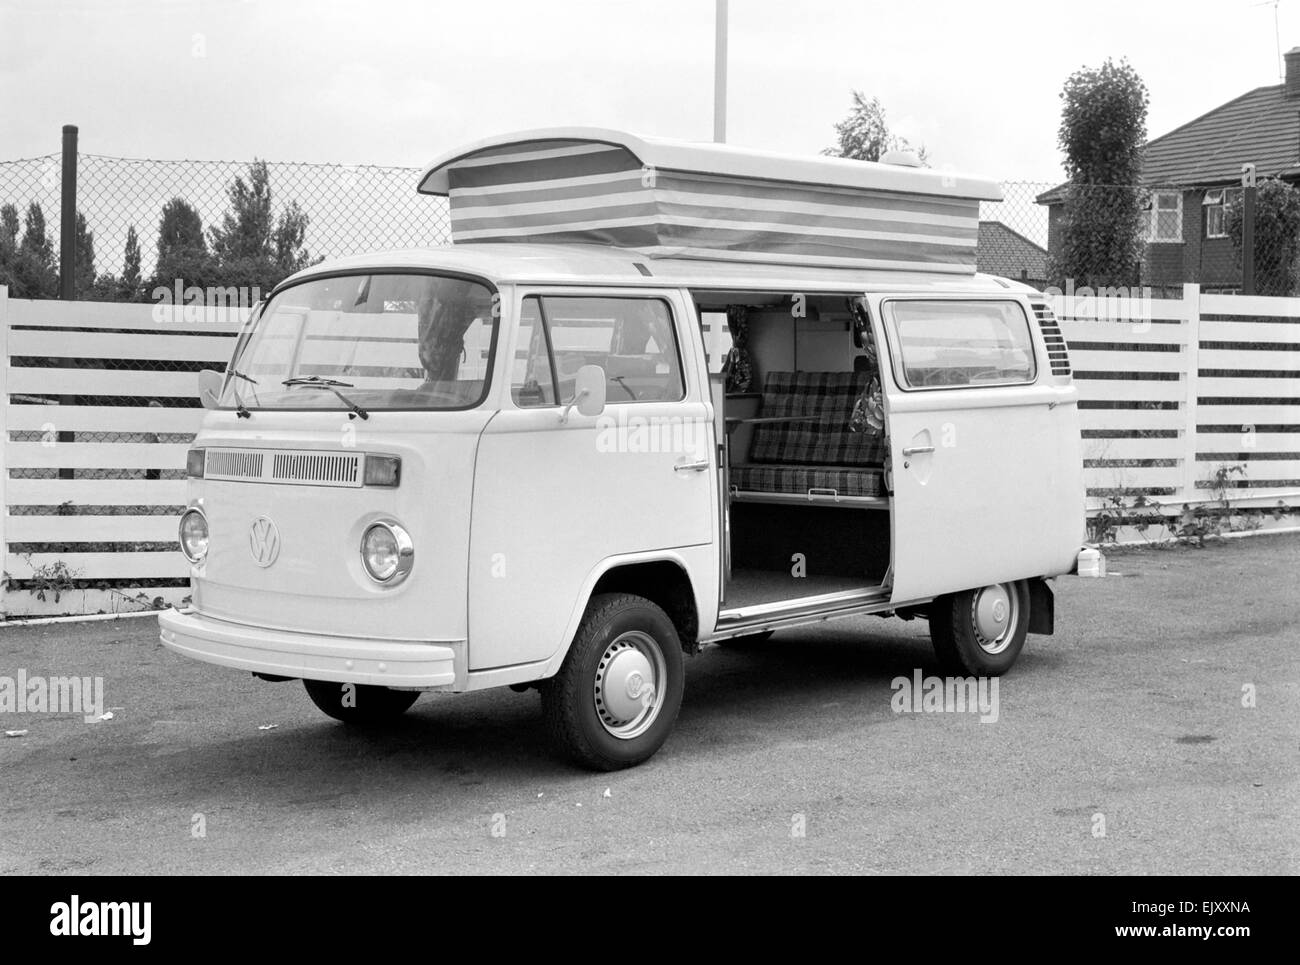 Devon Volkswagen Moonraker Motor Caravan. Août 1978 78-3944-006 *** *** Local Caption planman - - 03/02/2010 Banque D'Images